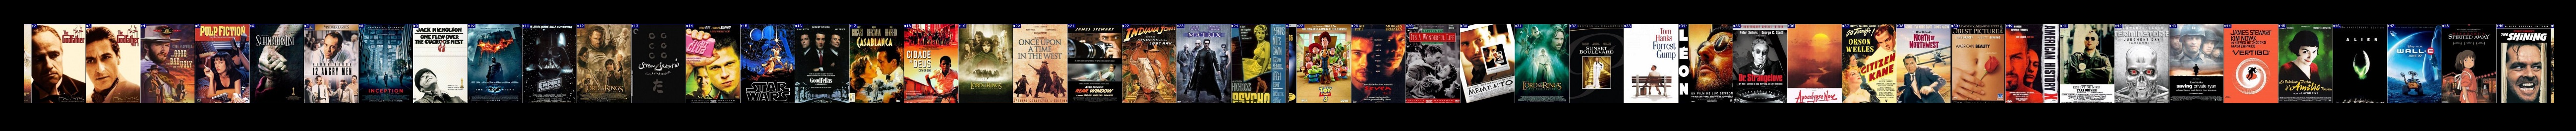 Top films